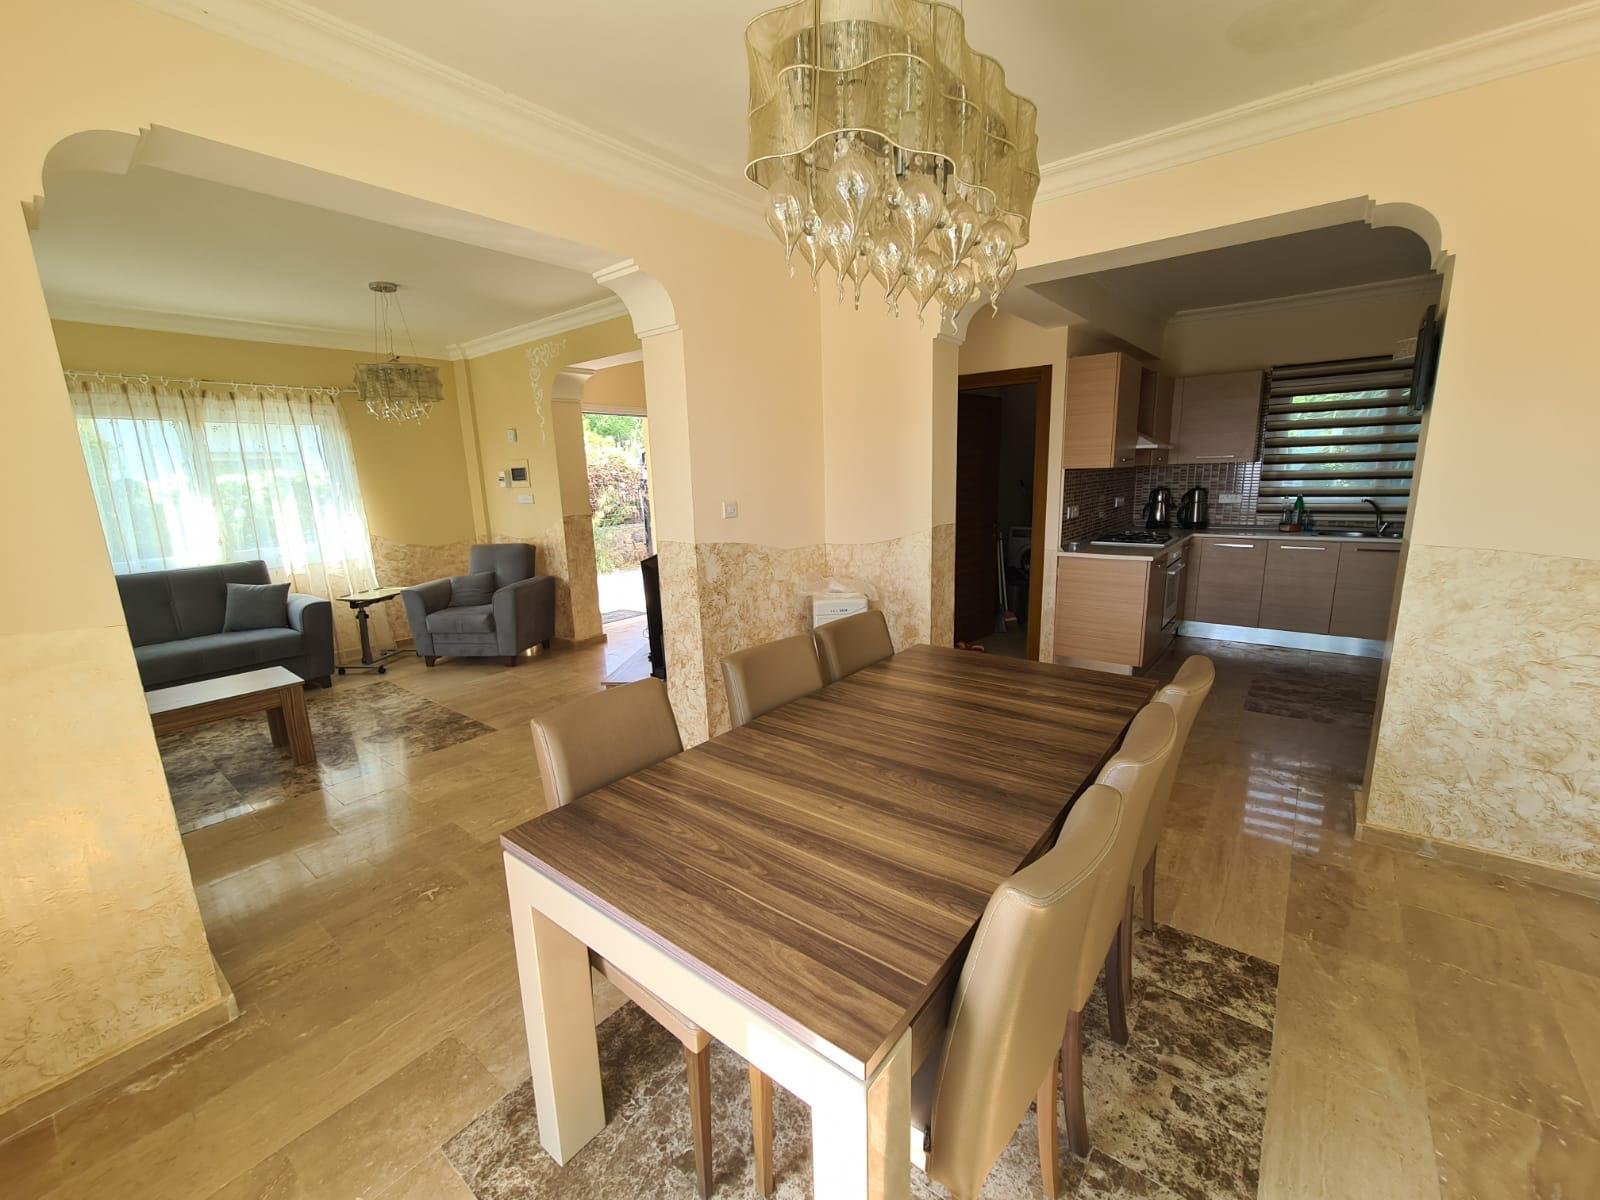 3 bedroom villa for sale in Kyrenia, Karshiyaka-0394d8a5-4531-4dac-b7c3-2eac472af0a4